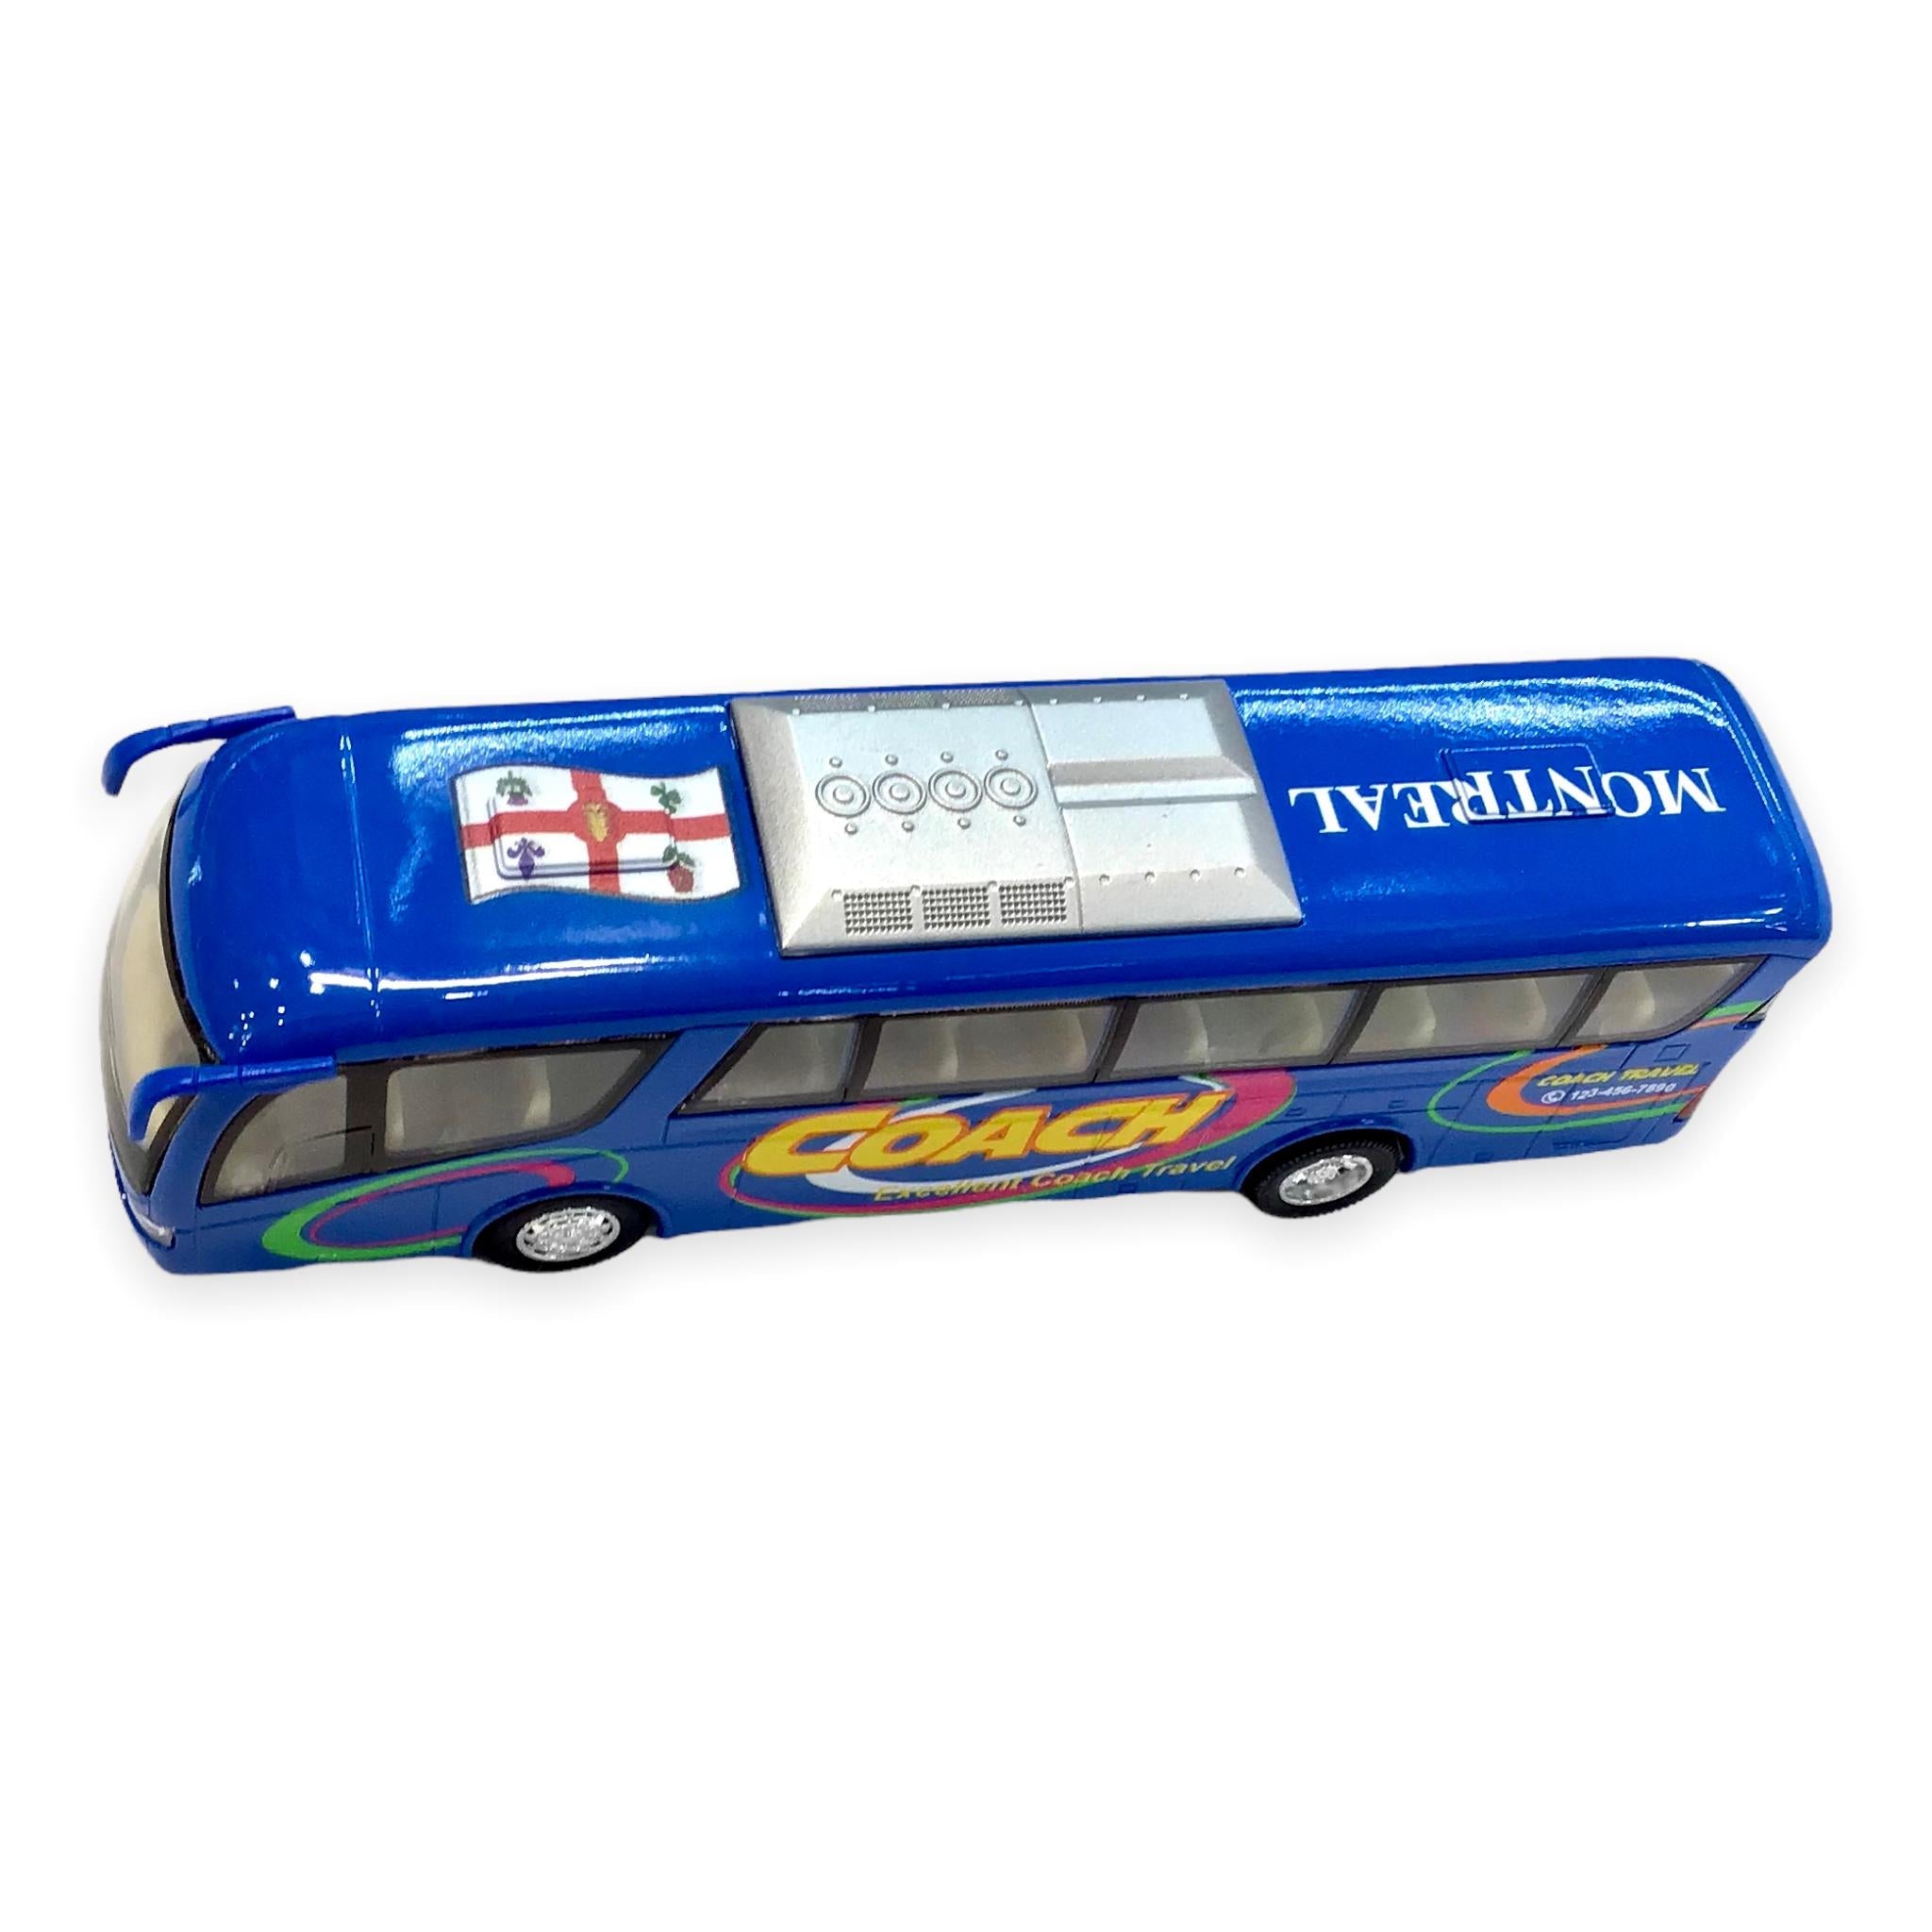 Montreal Coach Travel Tour Bus Toys Souvenir Gift - Metal Die Cast 7 inches